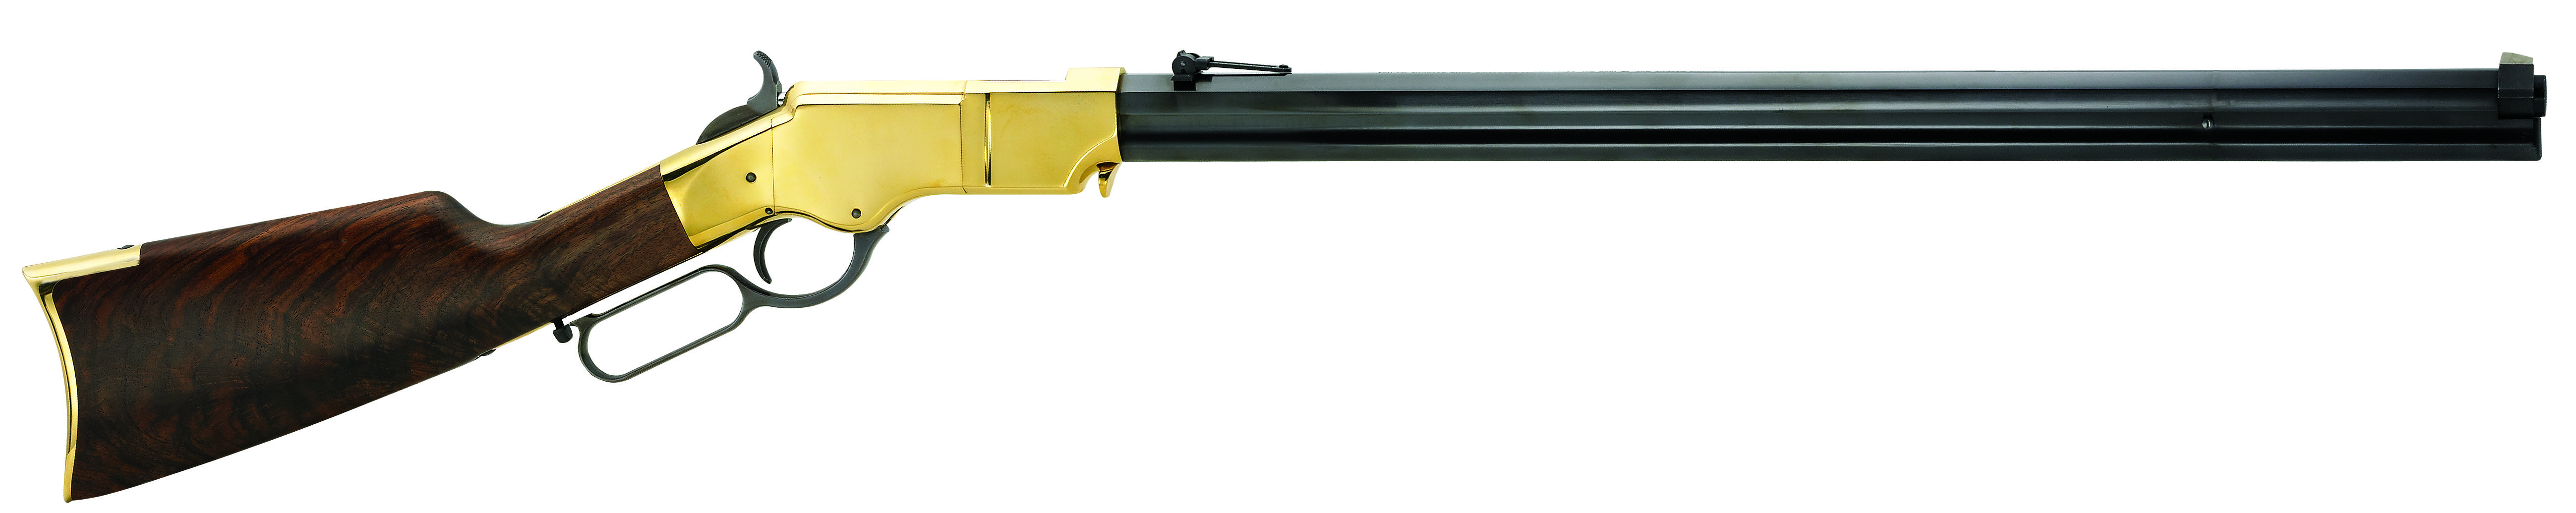 Henry H011 Original Henry Rifle 44-40 Win Caliber with 13+1 Capacity,...-img-0